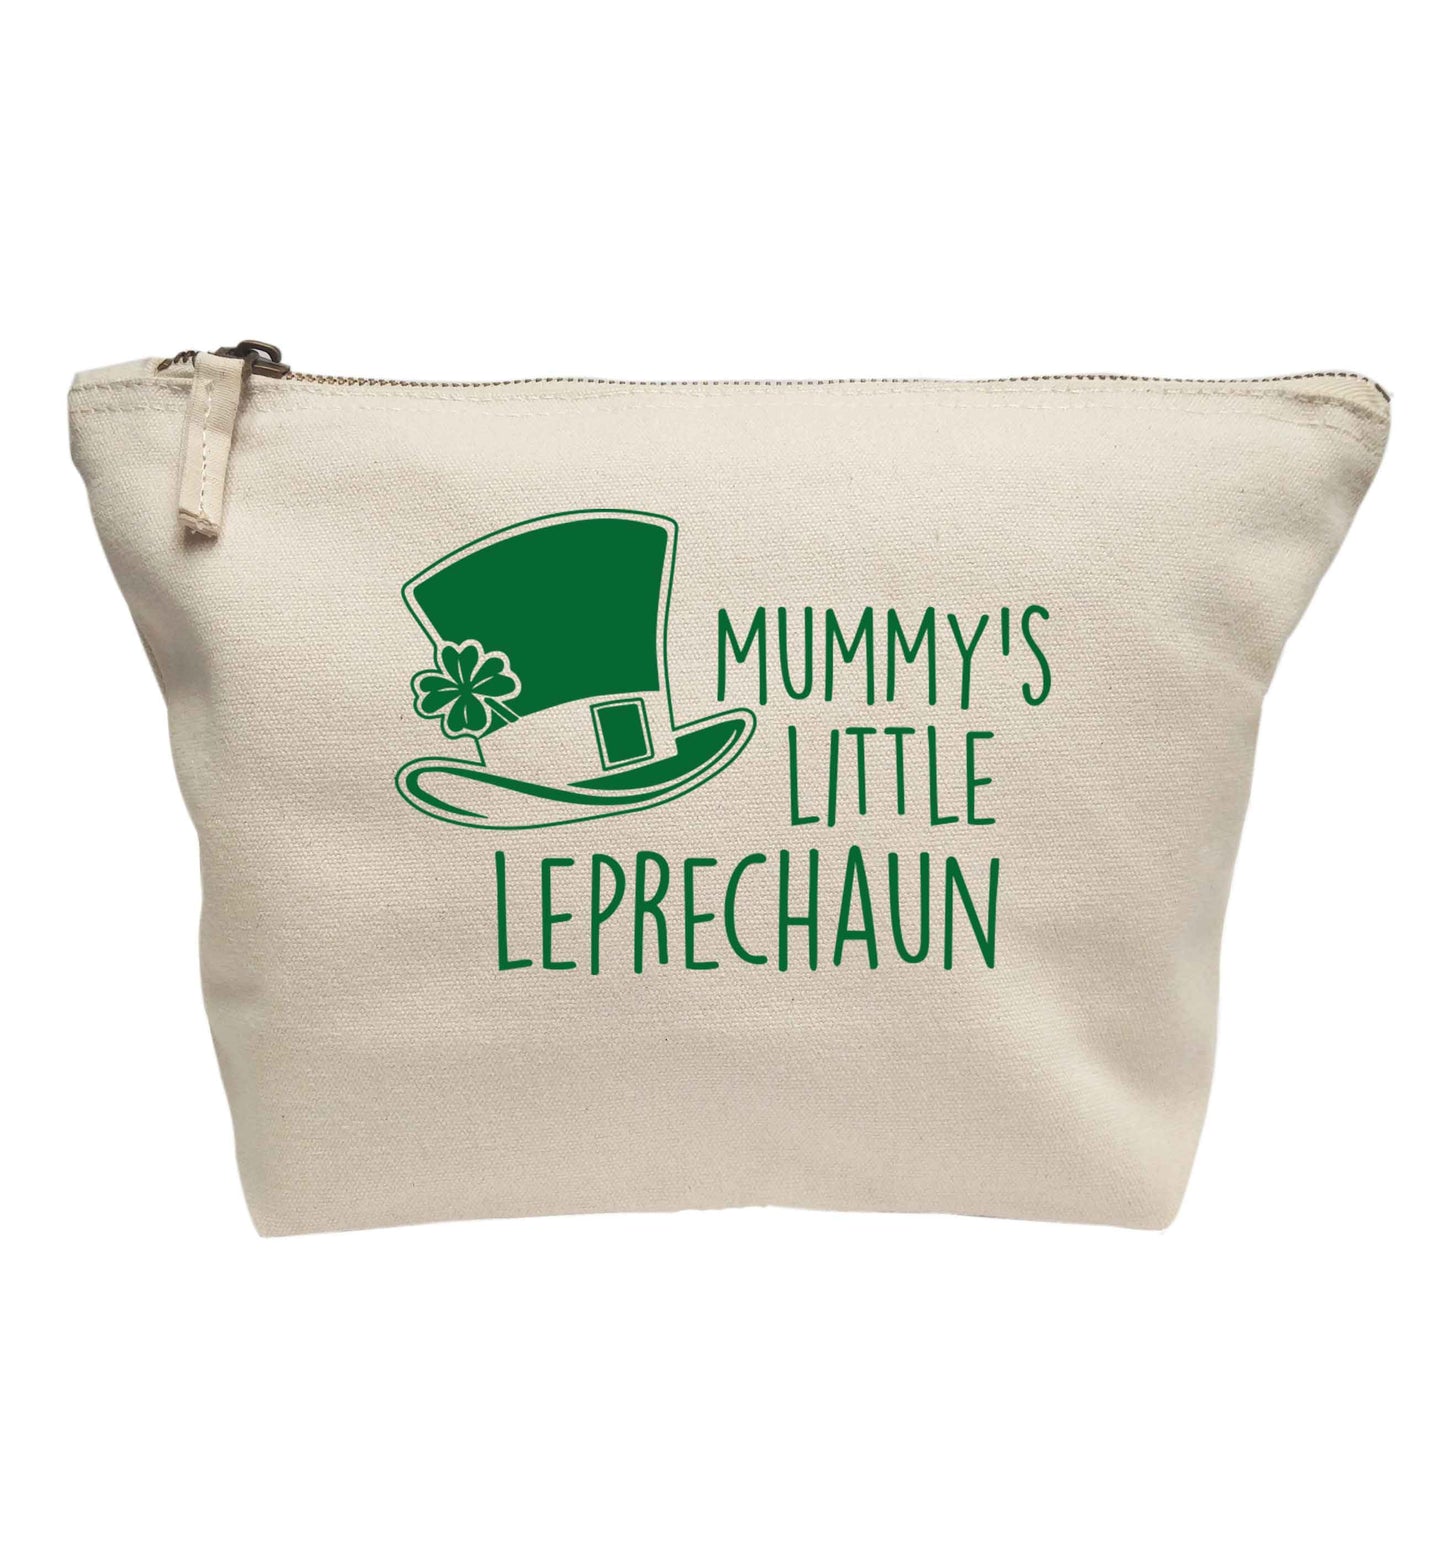 Mummy's little leprechaun | Makeup / wash bag